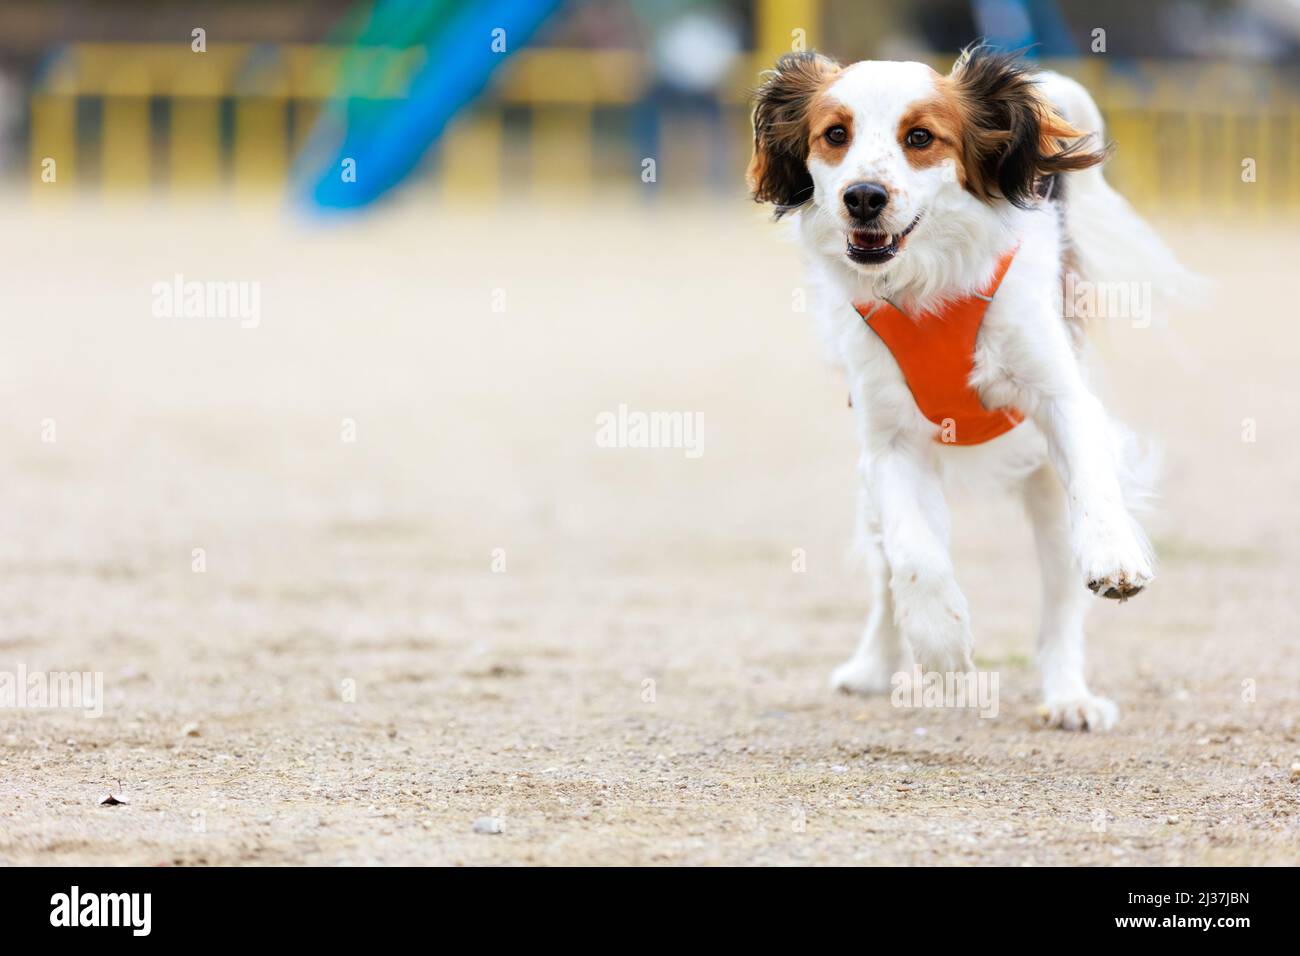 Happy purebred dog kooiker running towards the camera. Stock Photo